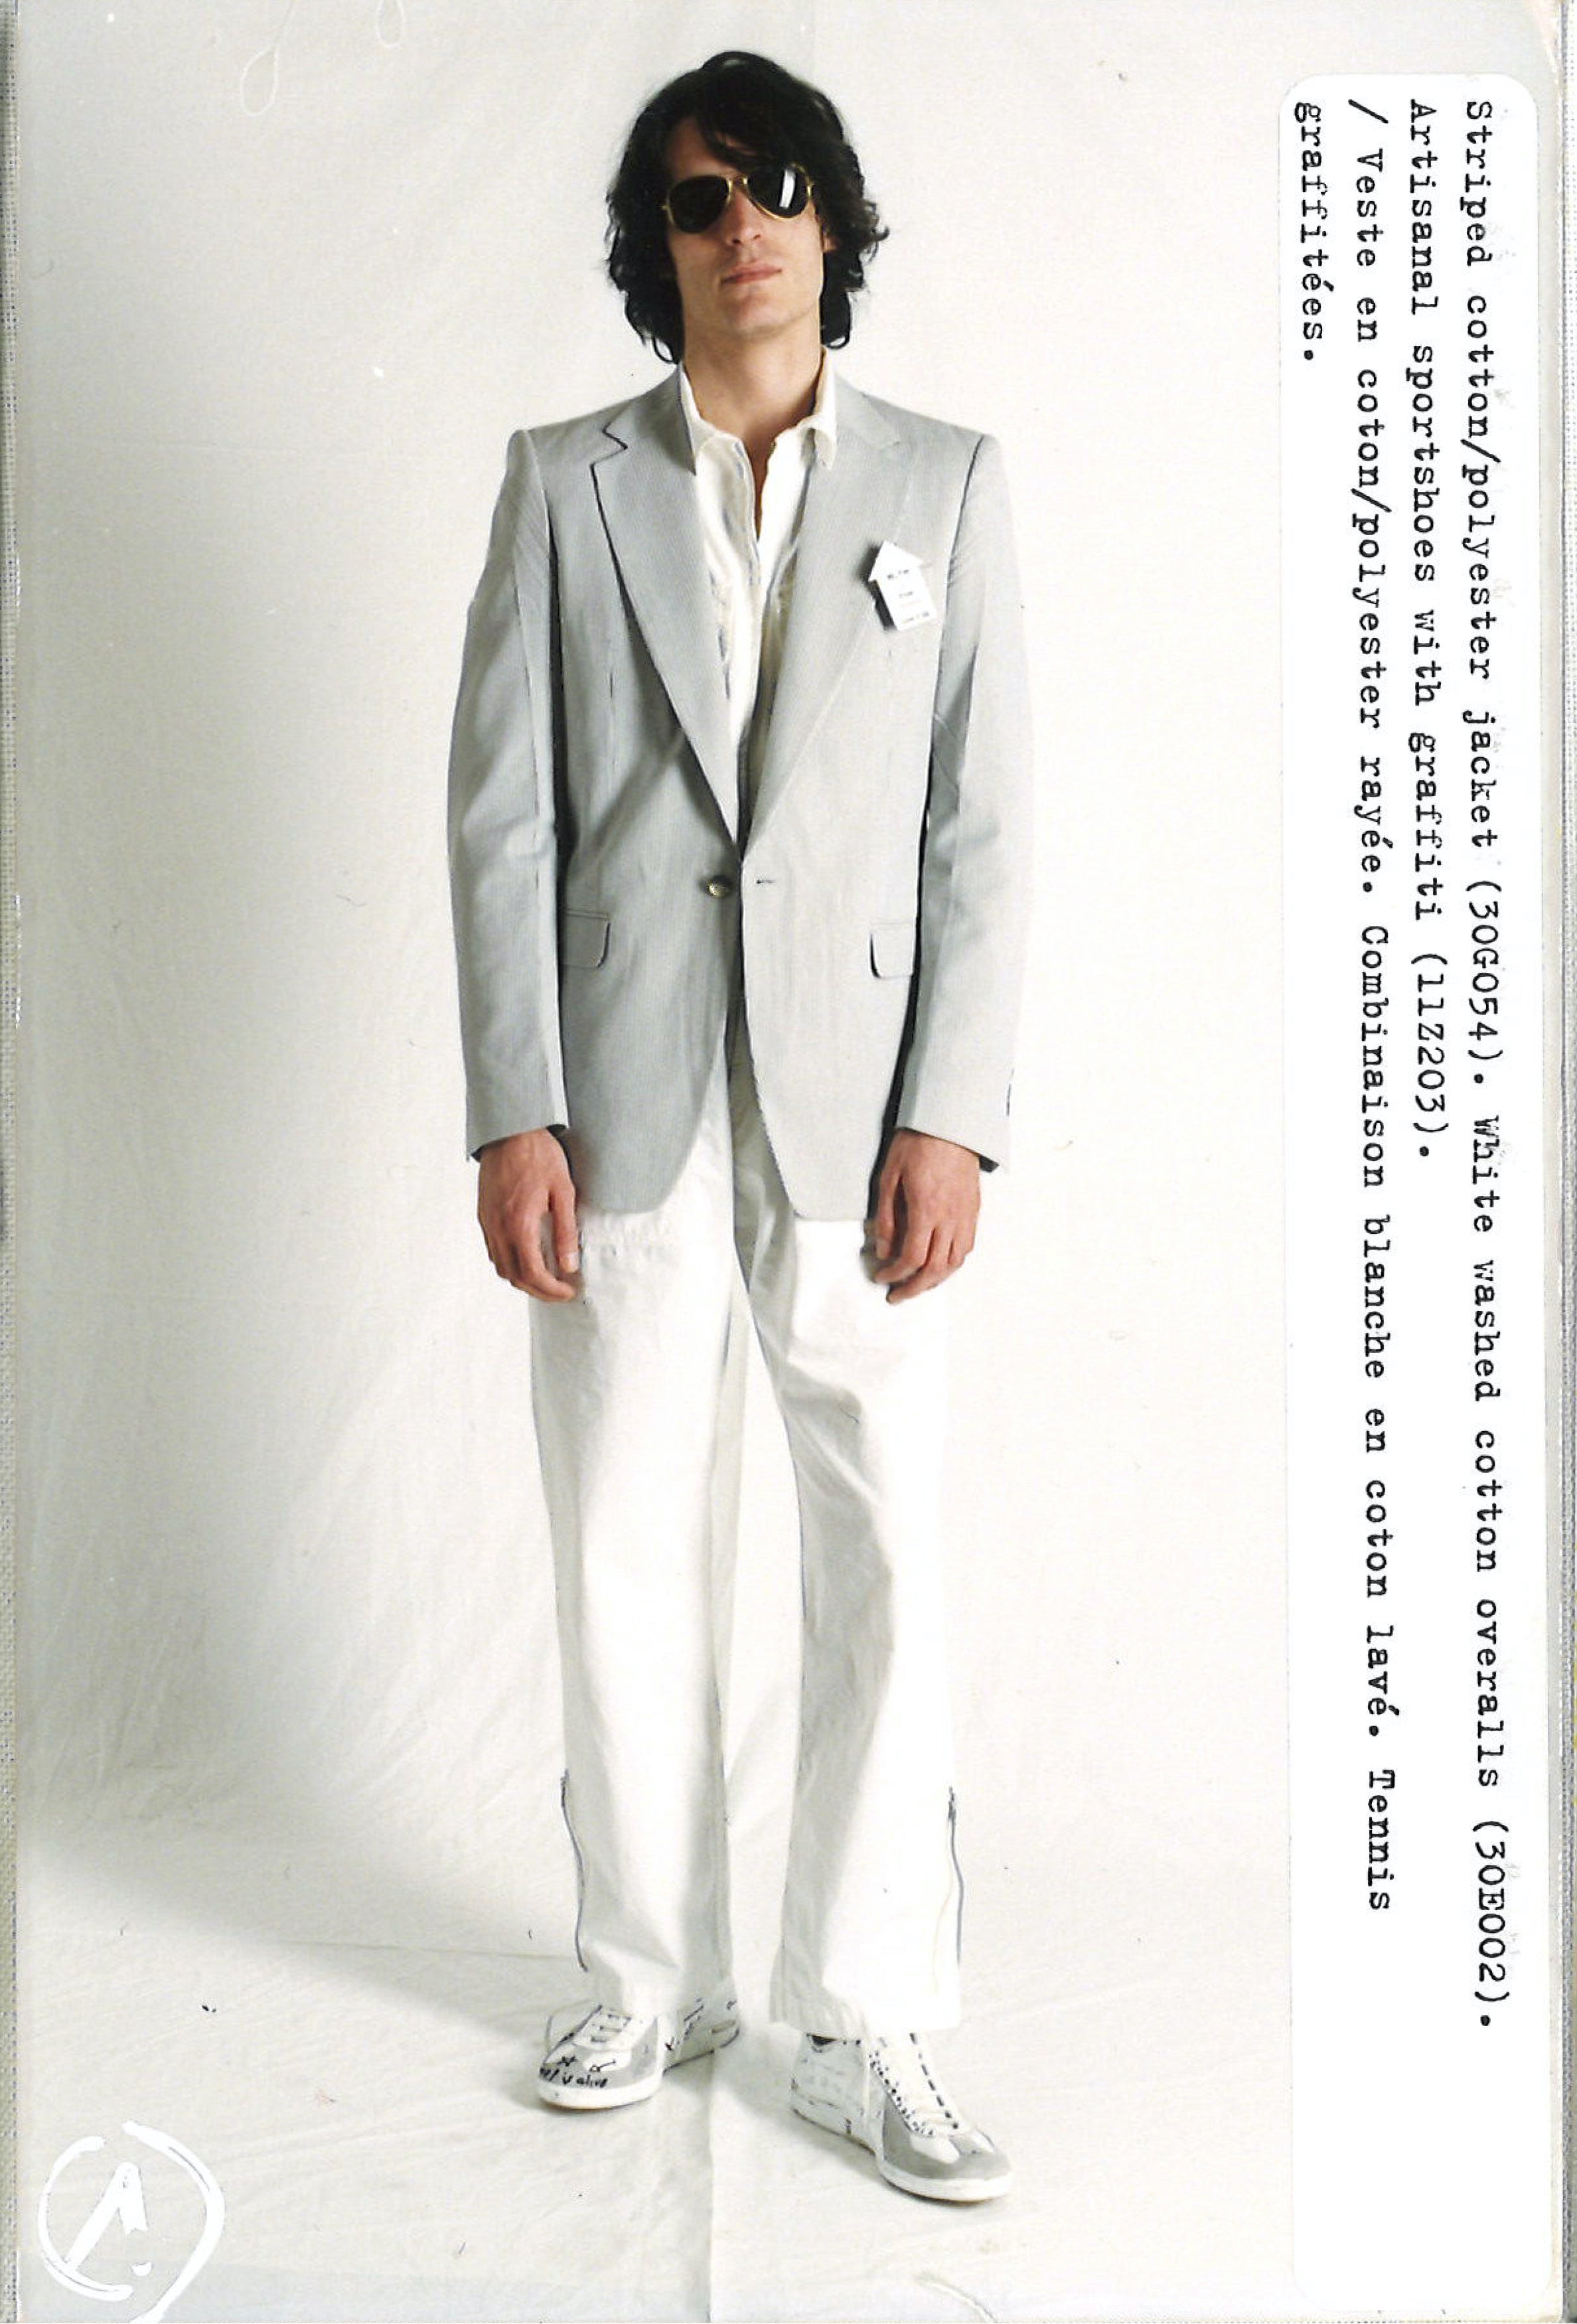 Maison Martin Margiela Lookbook
Menswear Collection Spring/Summer 2002